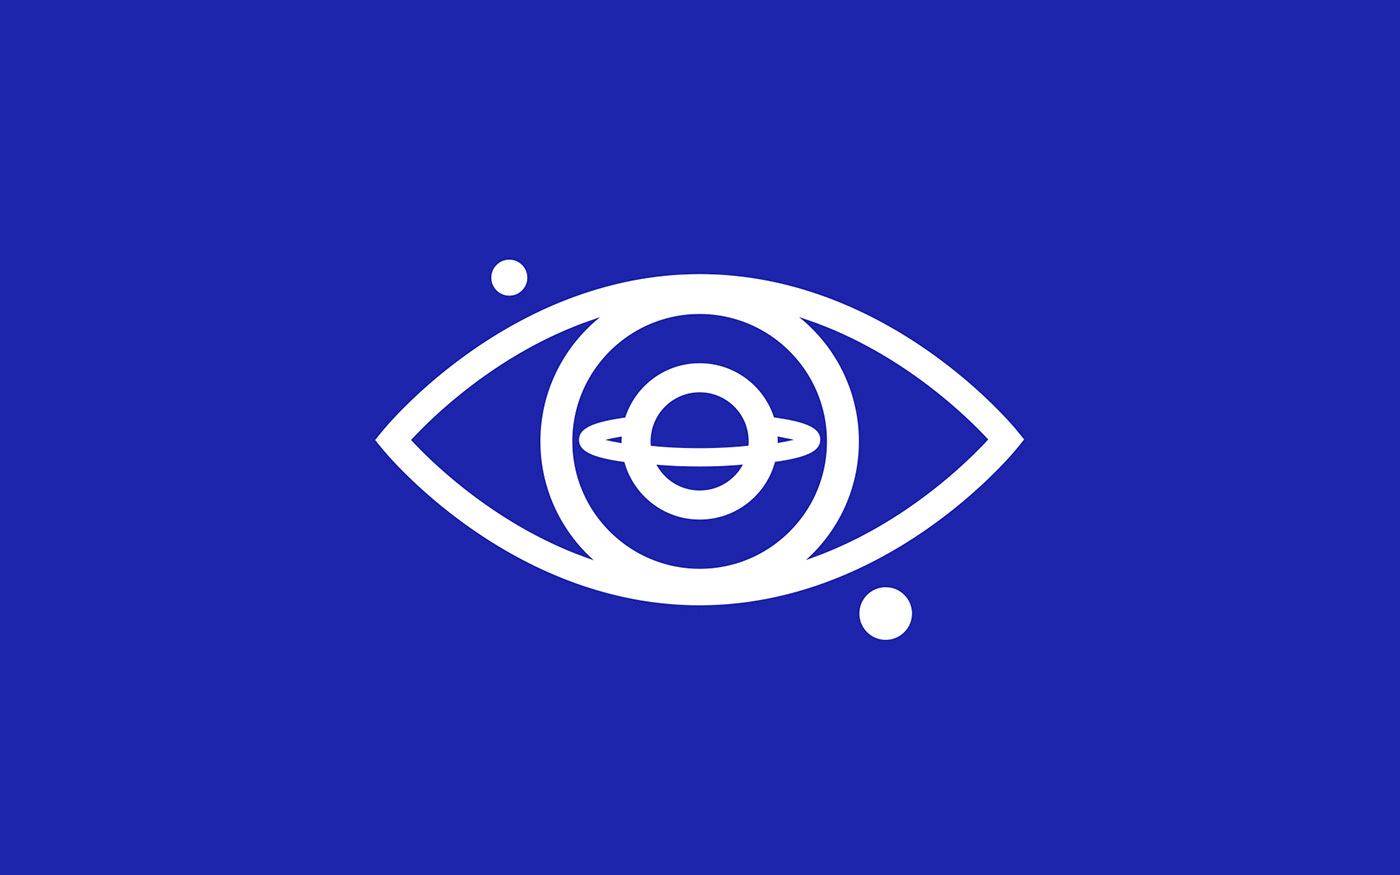 cosmoptical eye galaxy logo Greece sophiagdotcom sophiageorgopoulou glasses Optician world